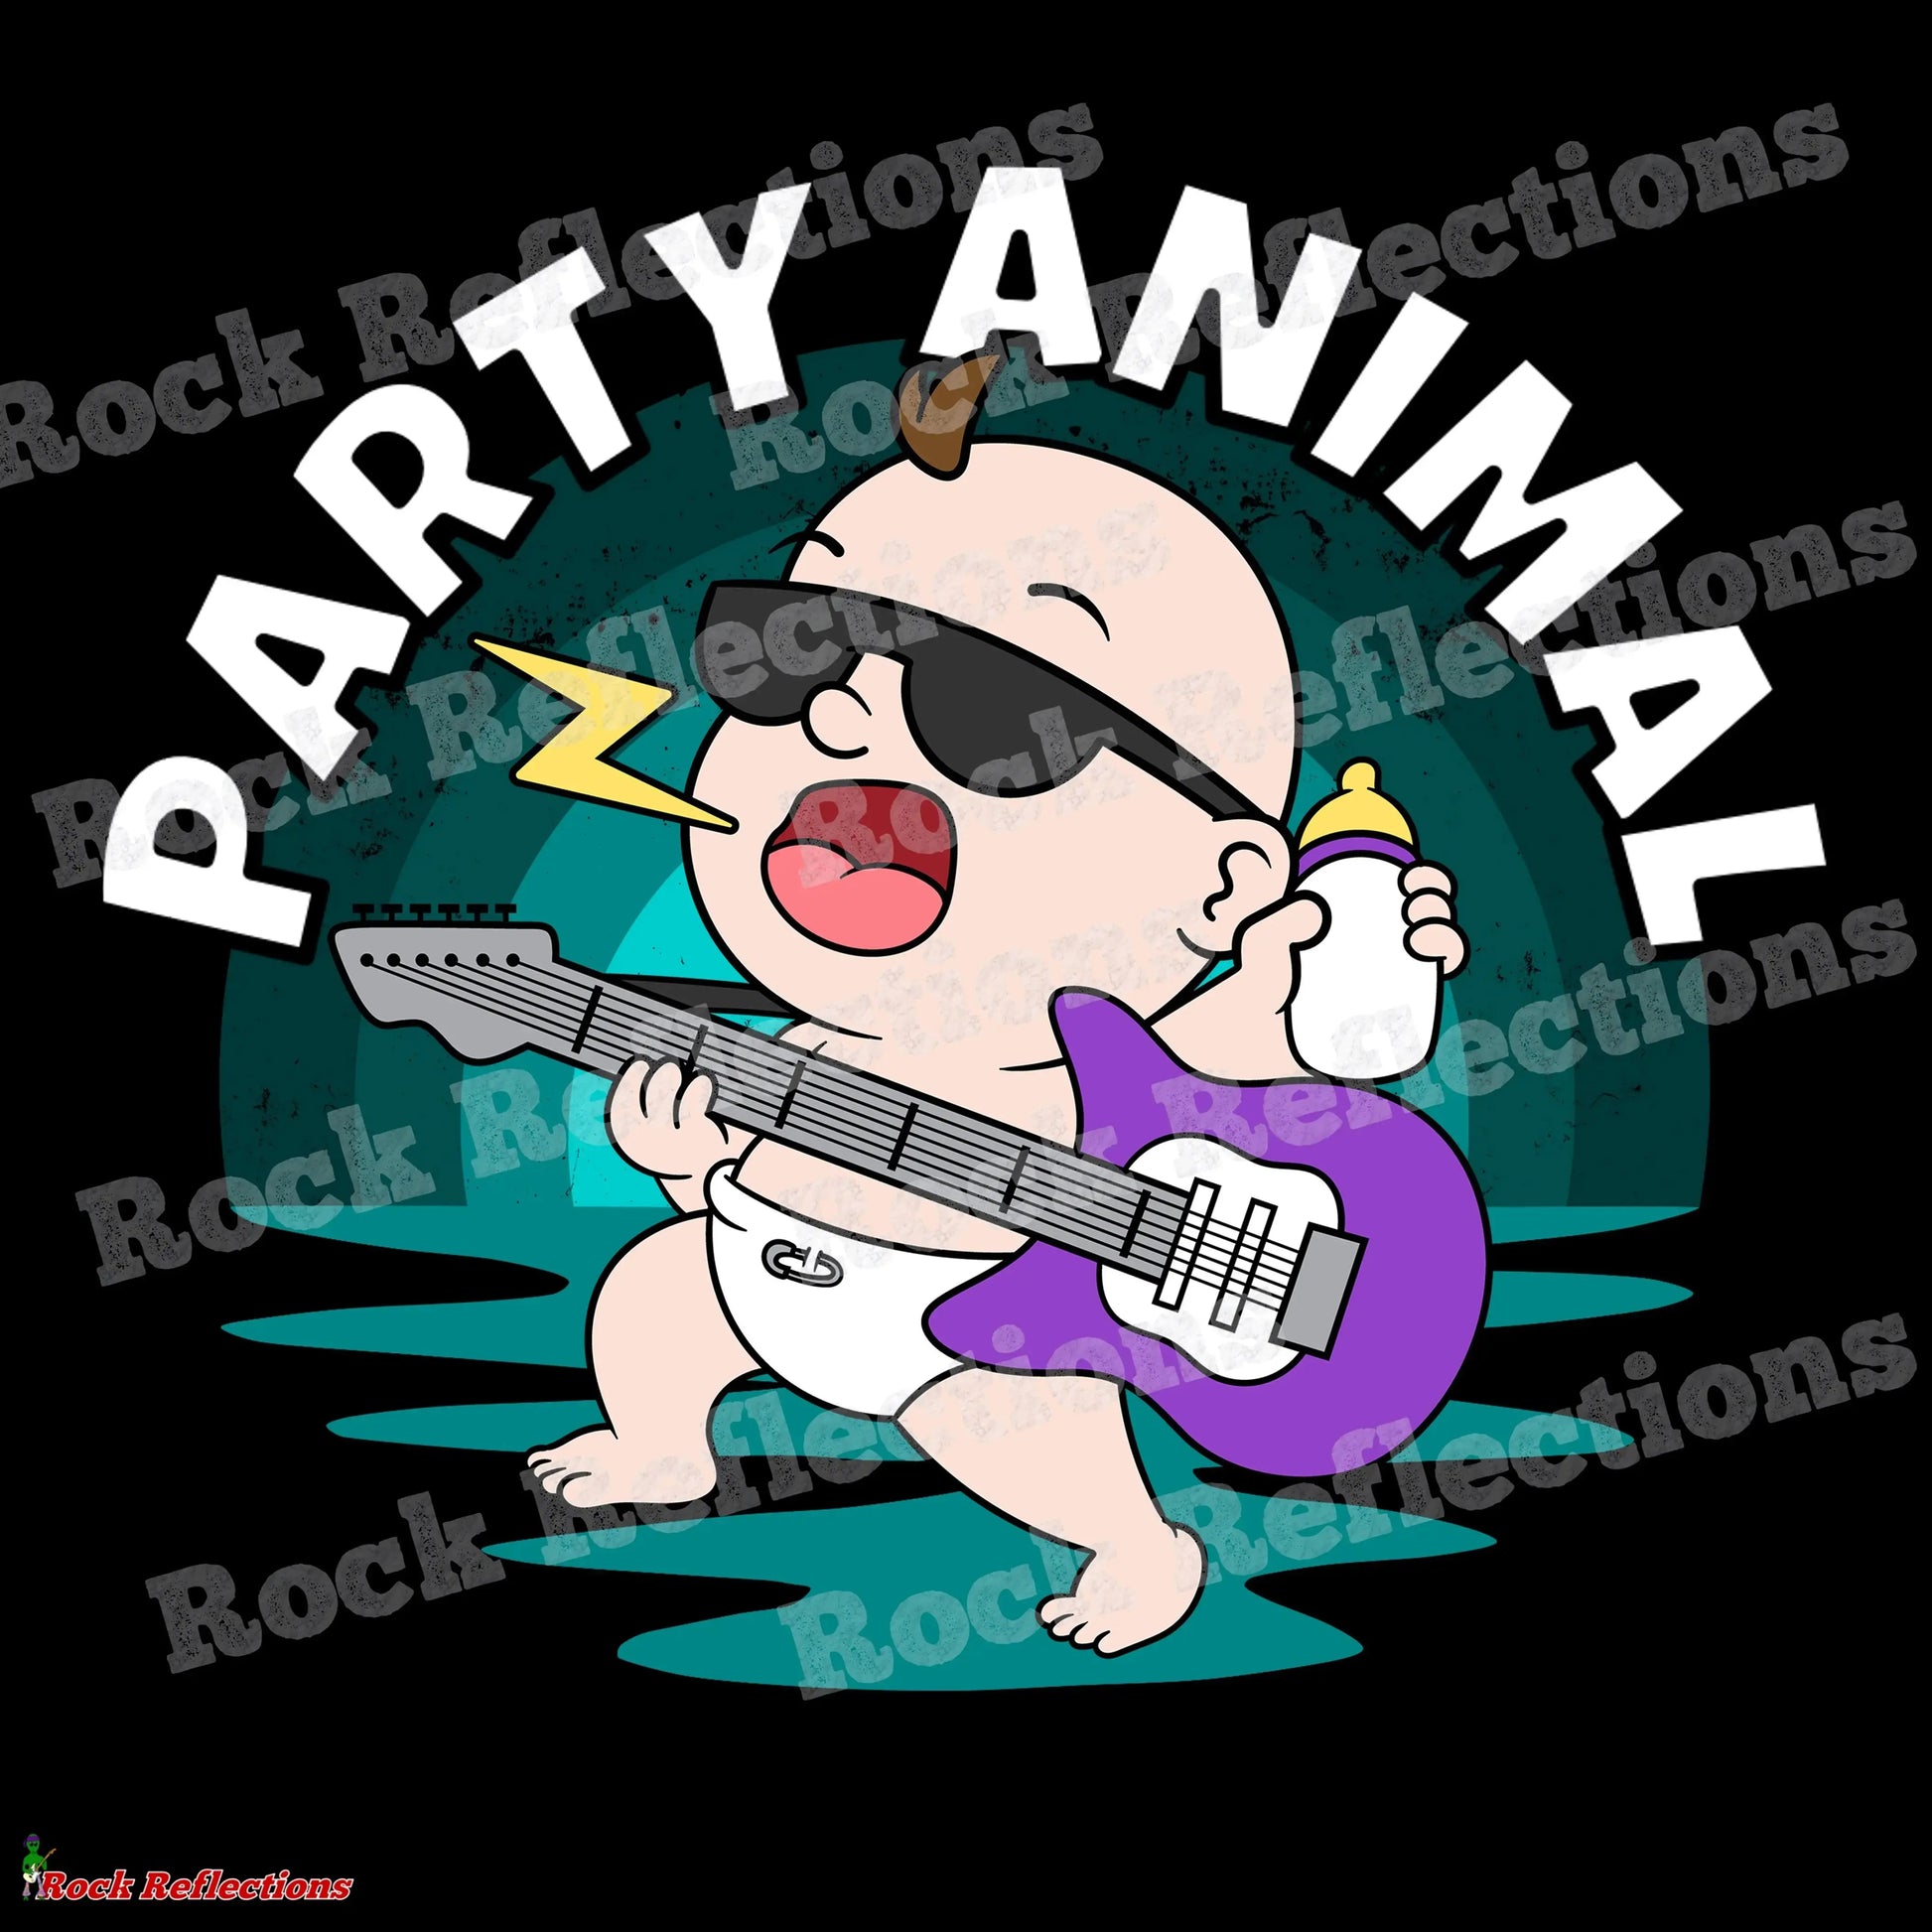 Party Animal Baby SPOD